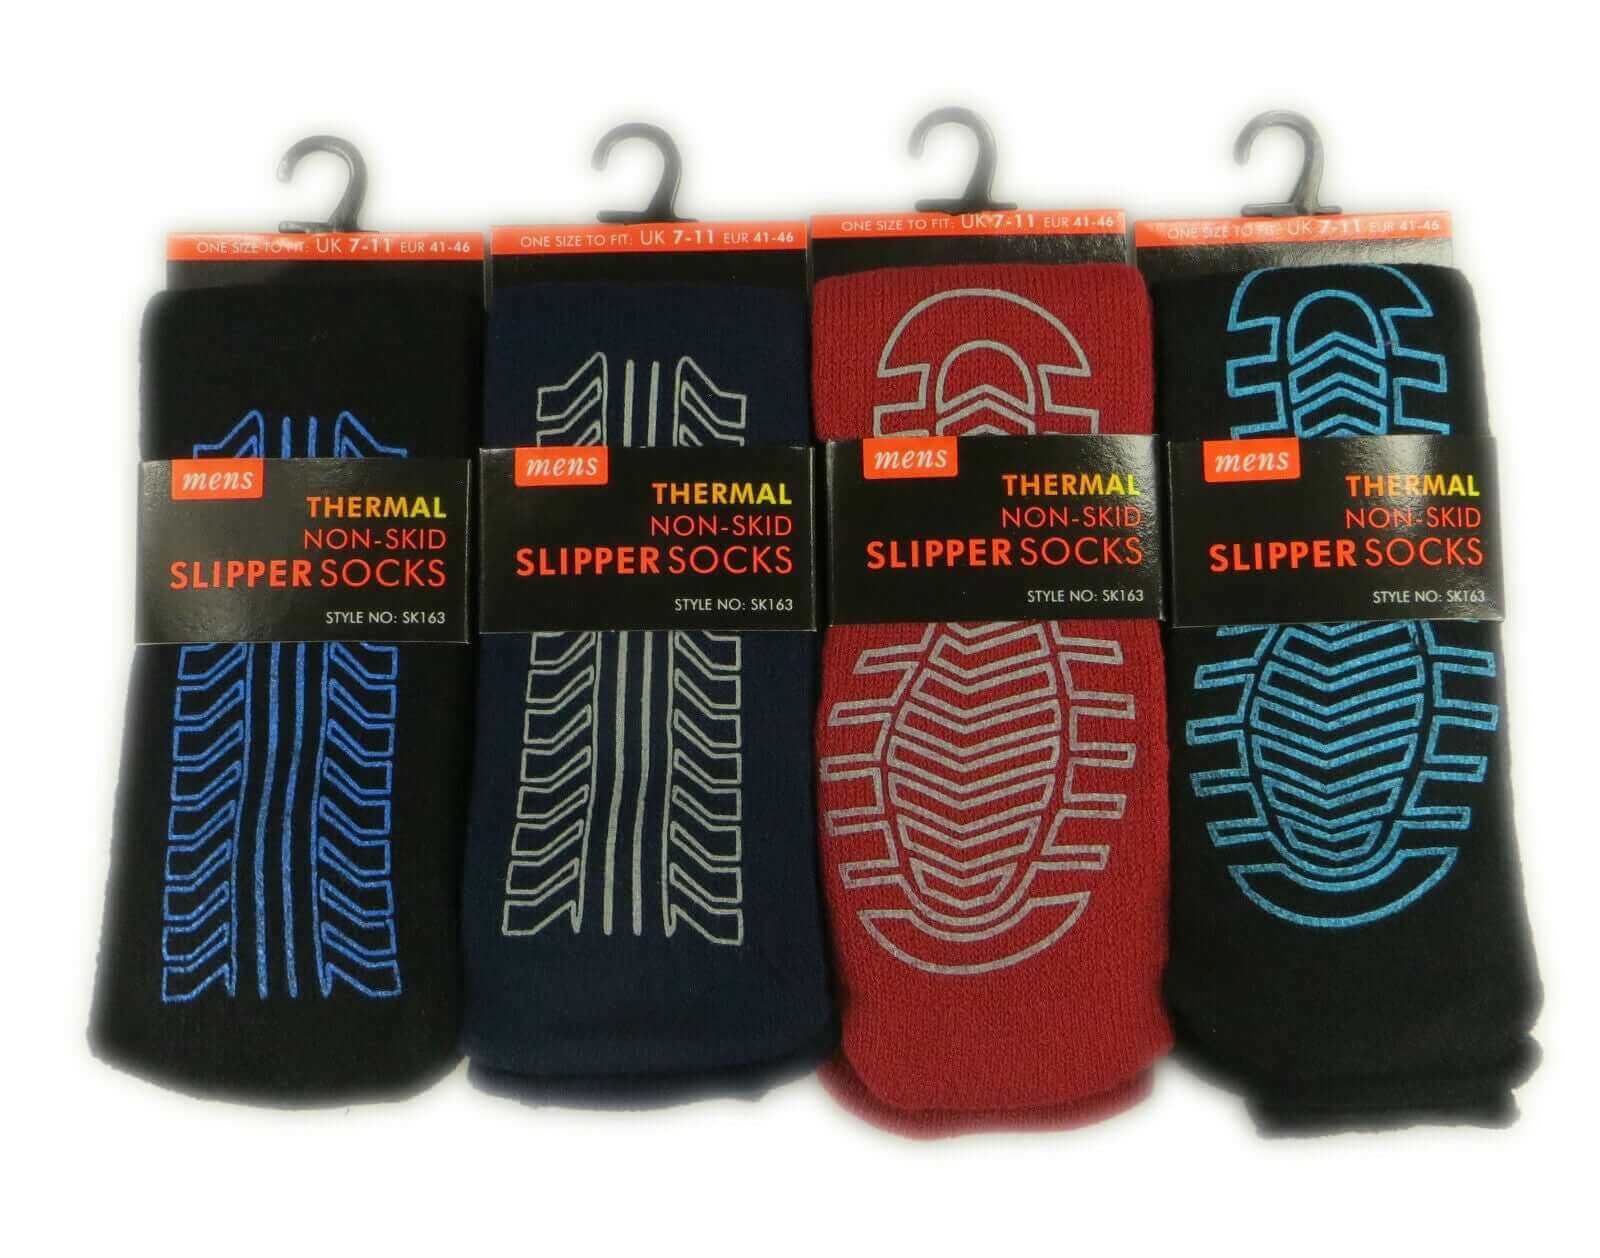 4 Pairs Of Men's Thermal Slipper Socks, Non-Skid Gripper Socks, Winter Gift S163. Buy now for £8.00. A Socks by Sock Stack. 6-11, acrylic, assorted, athletics, black, boot socks, boys, boys socks, breathable, comfortable, cosy, fluffy, footwear, gift, men